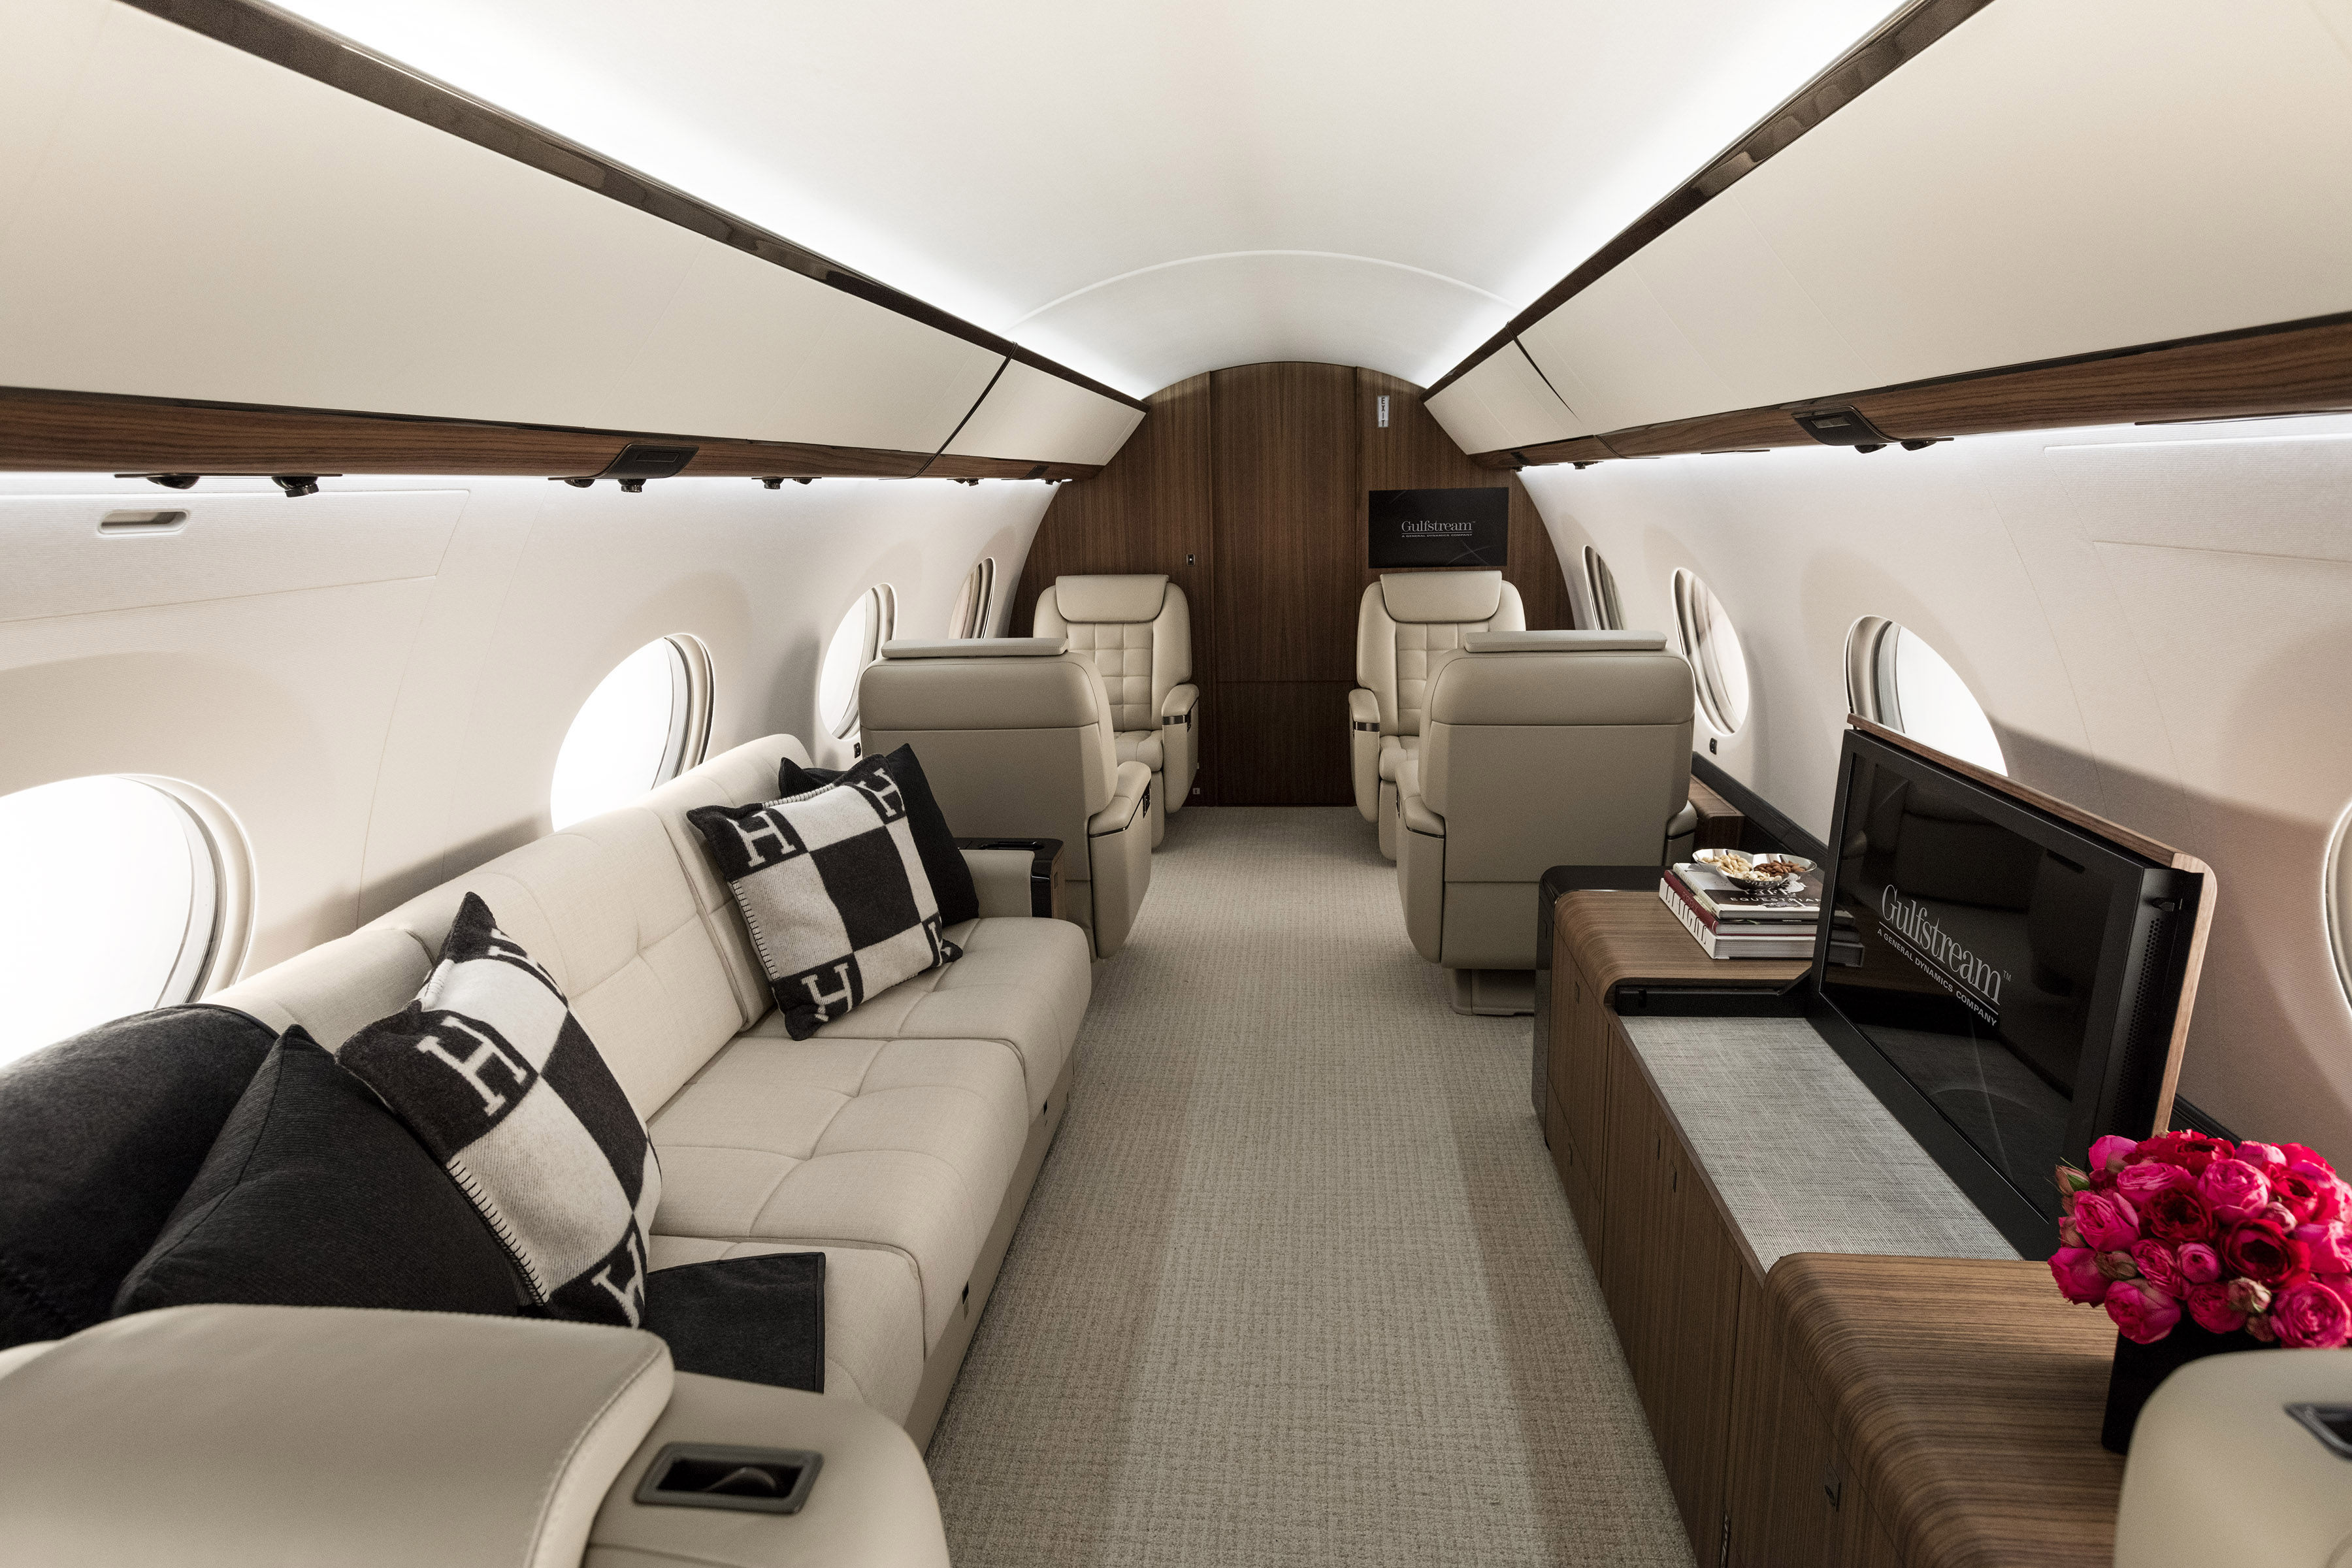 The Luxury Private Jet Interiors - AEROAFFAIRES